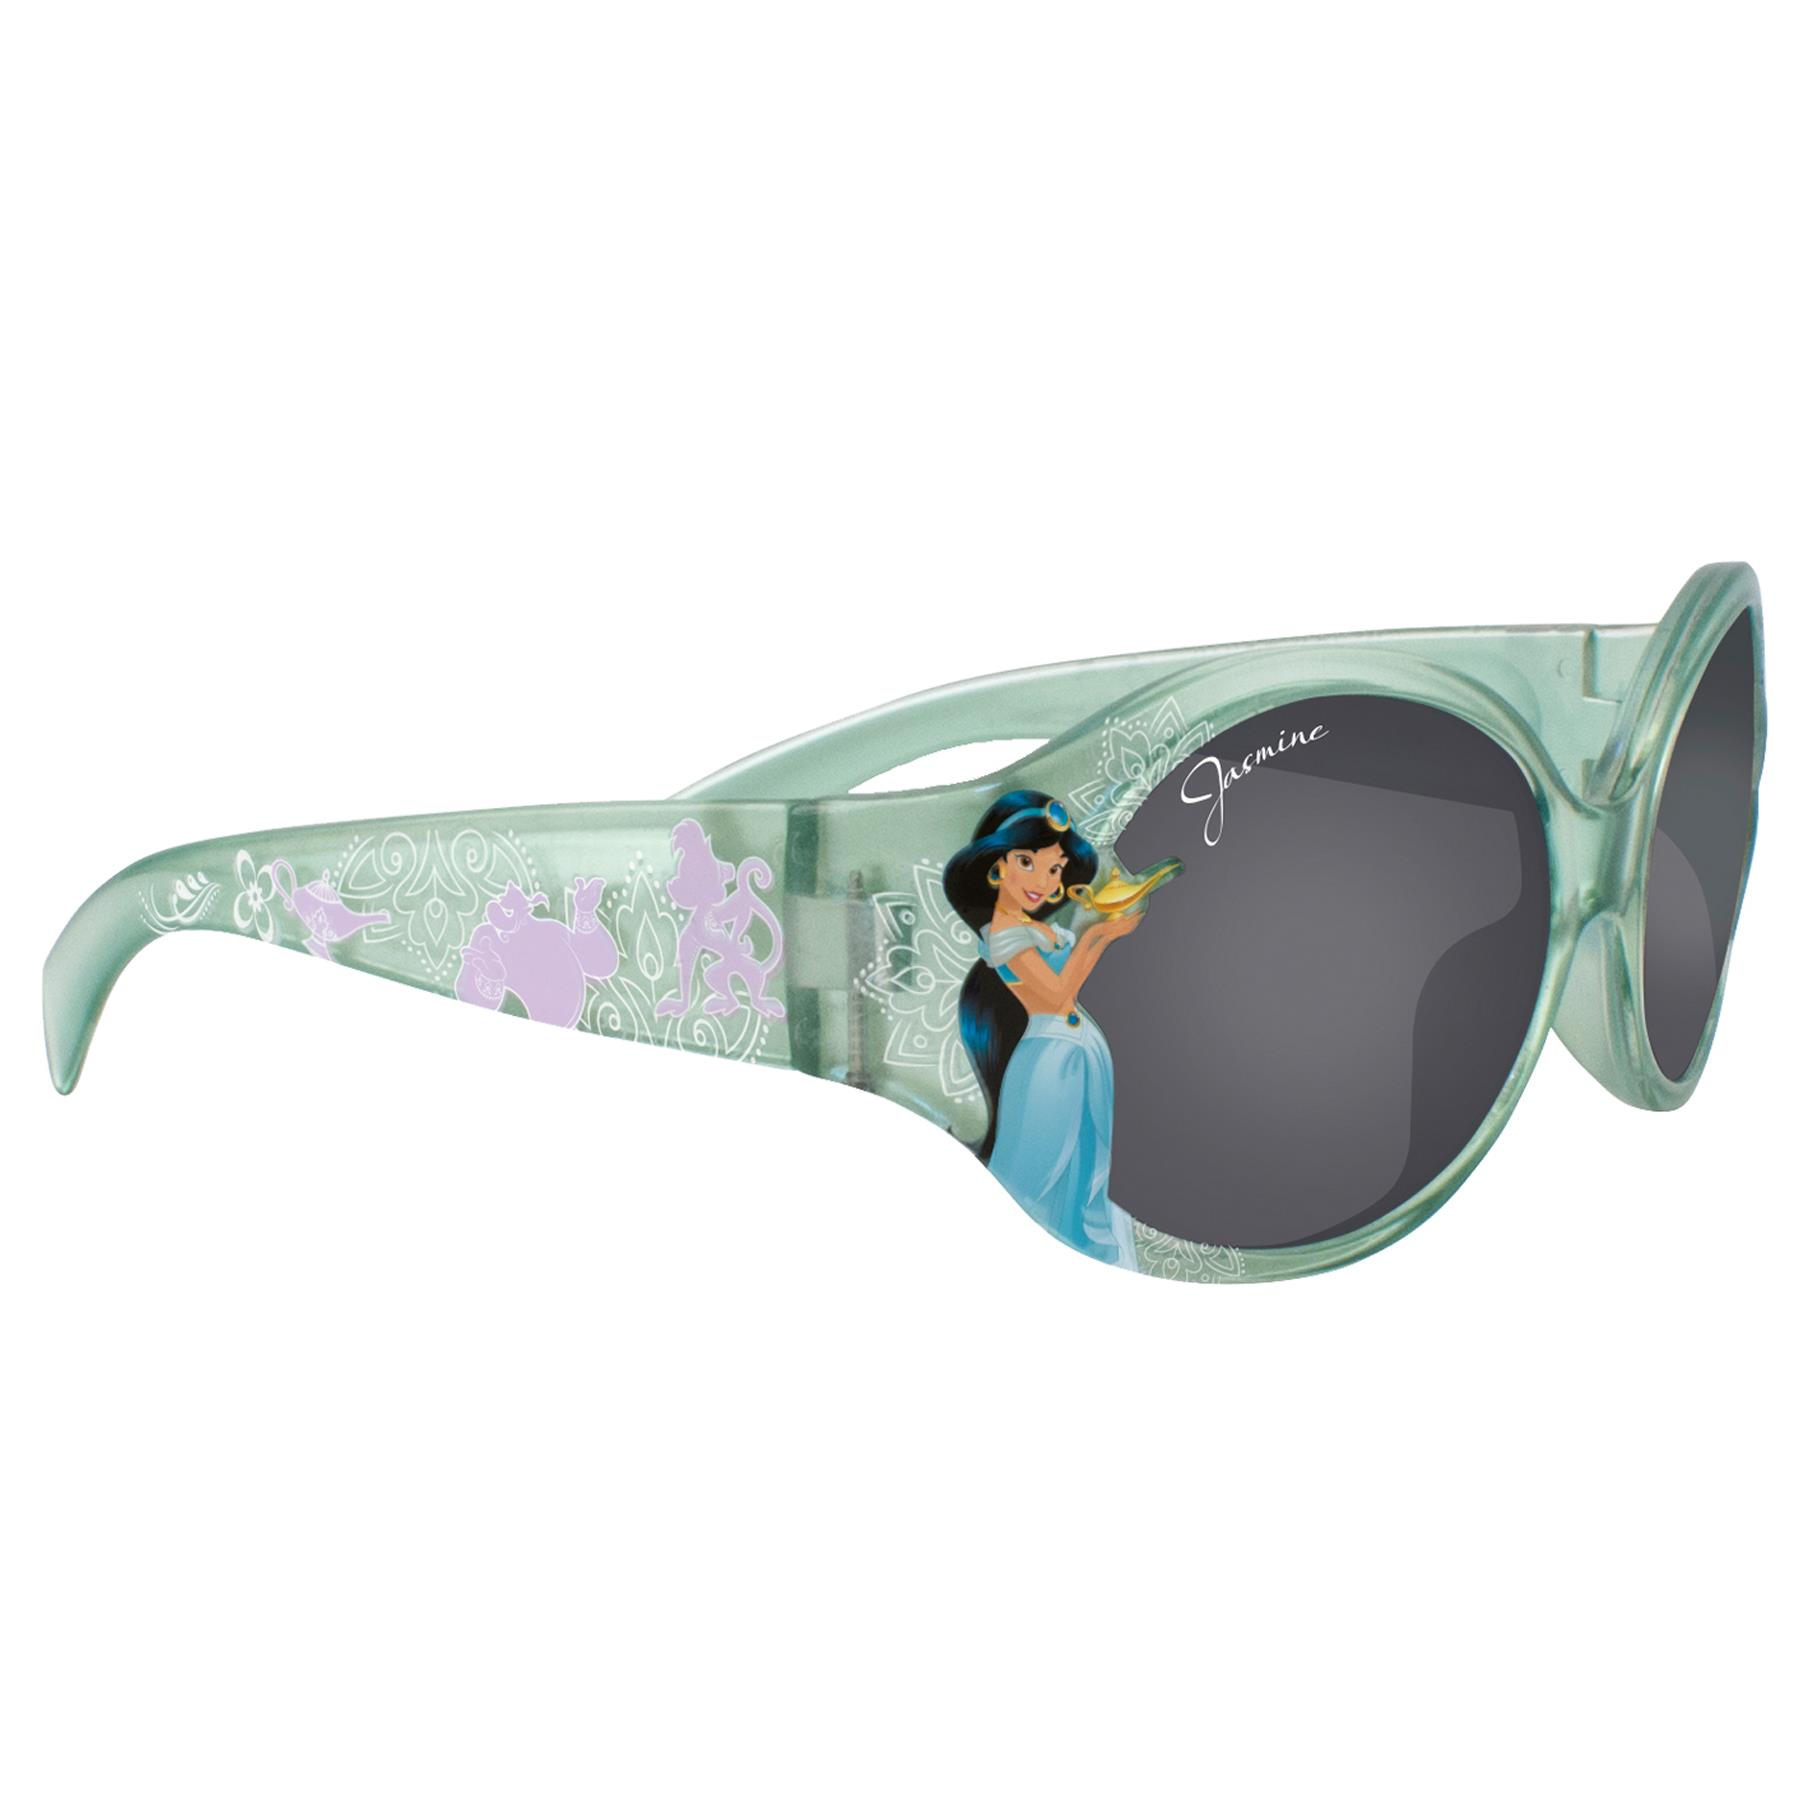 Disney Princess Children's Sunglasses UV protection for Holiday - Jasmine LP19